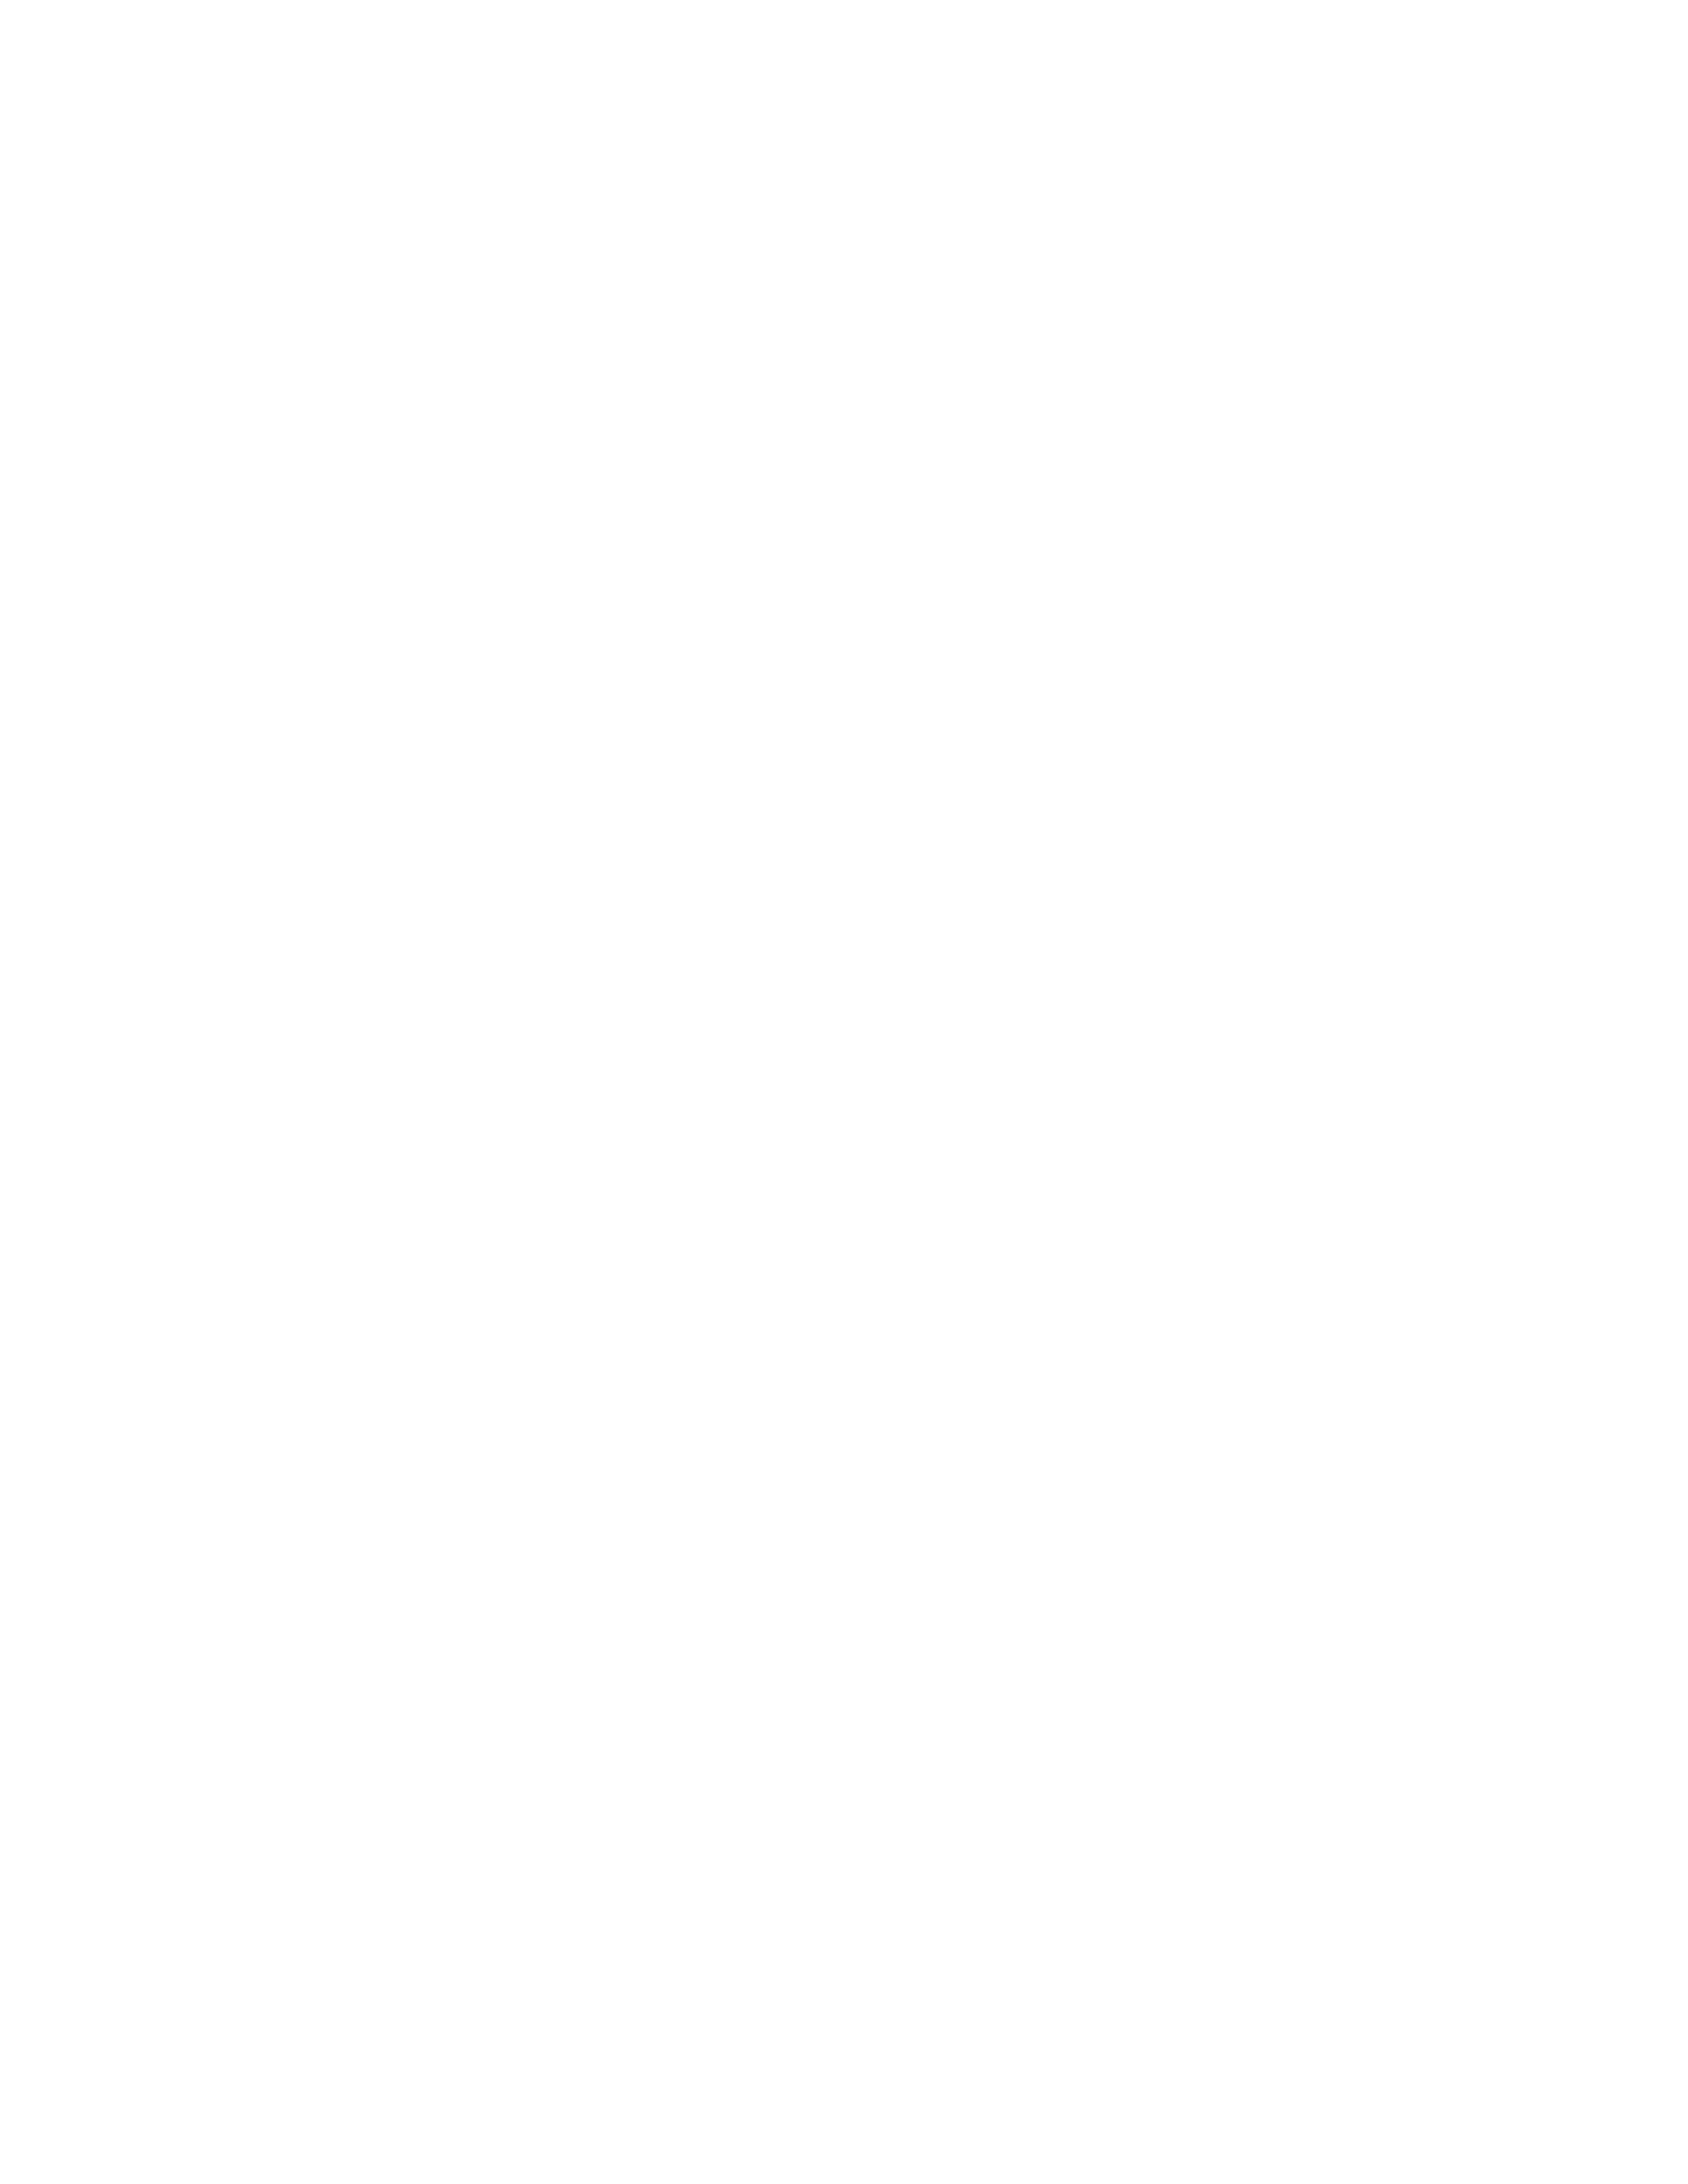 AAPD walking challenge